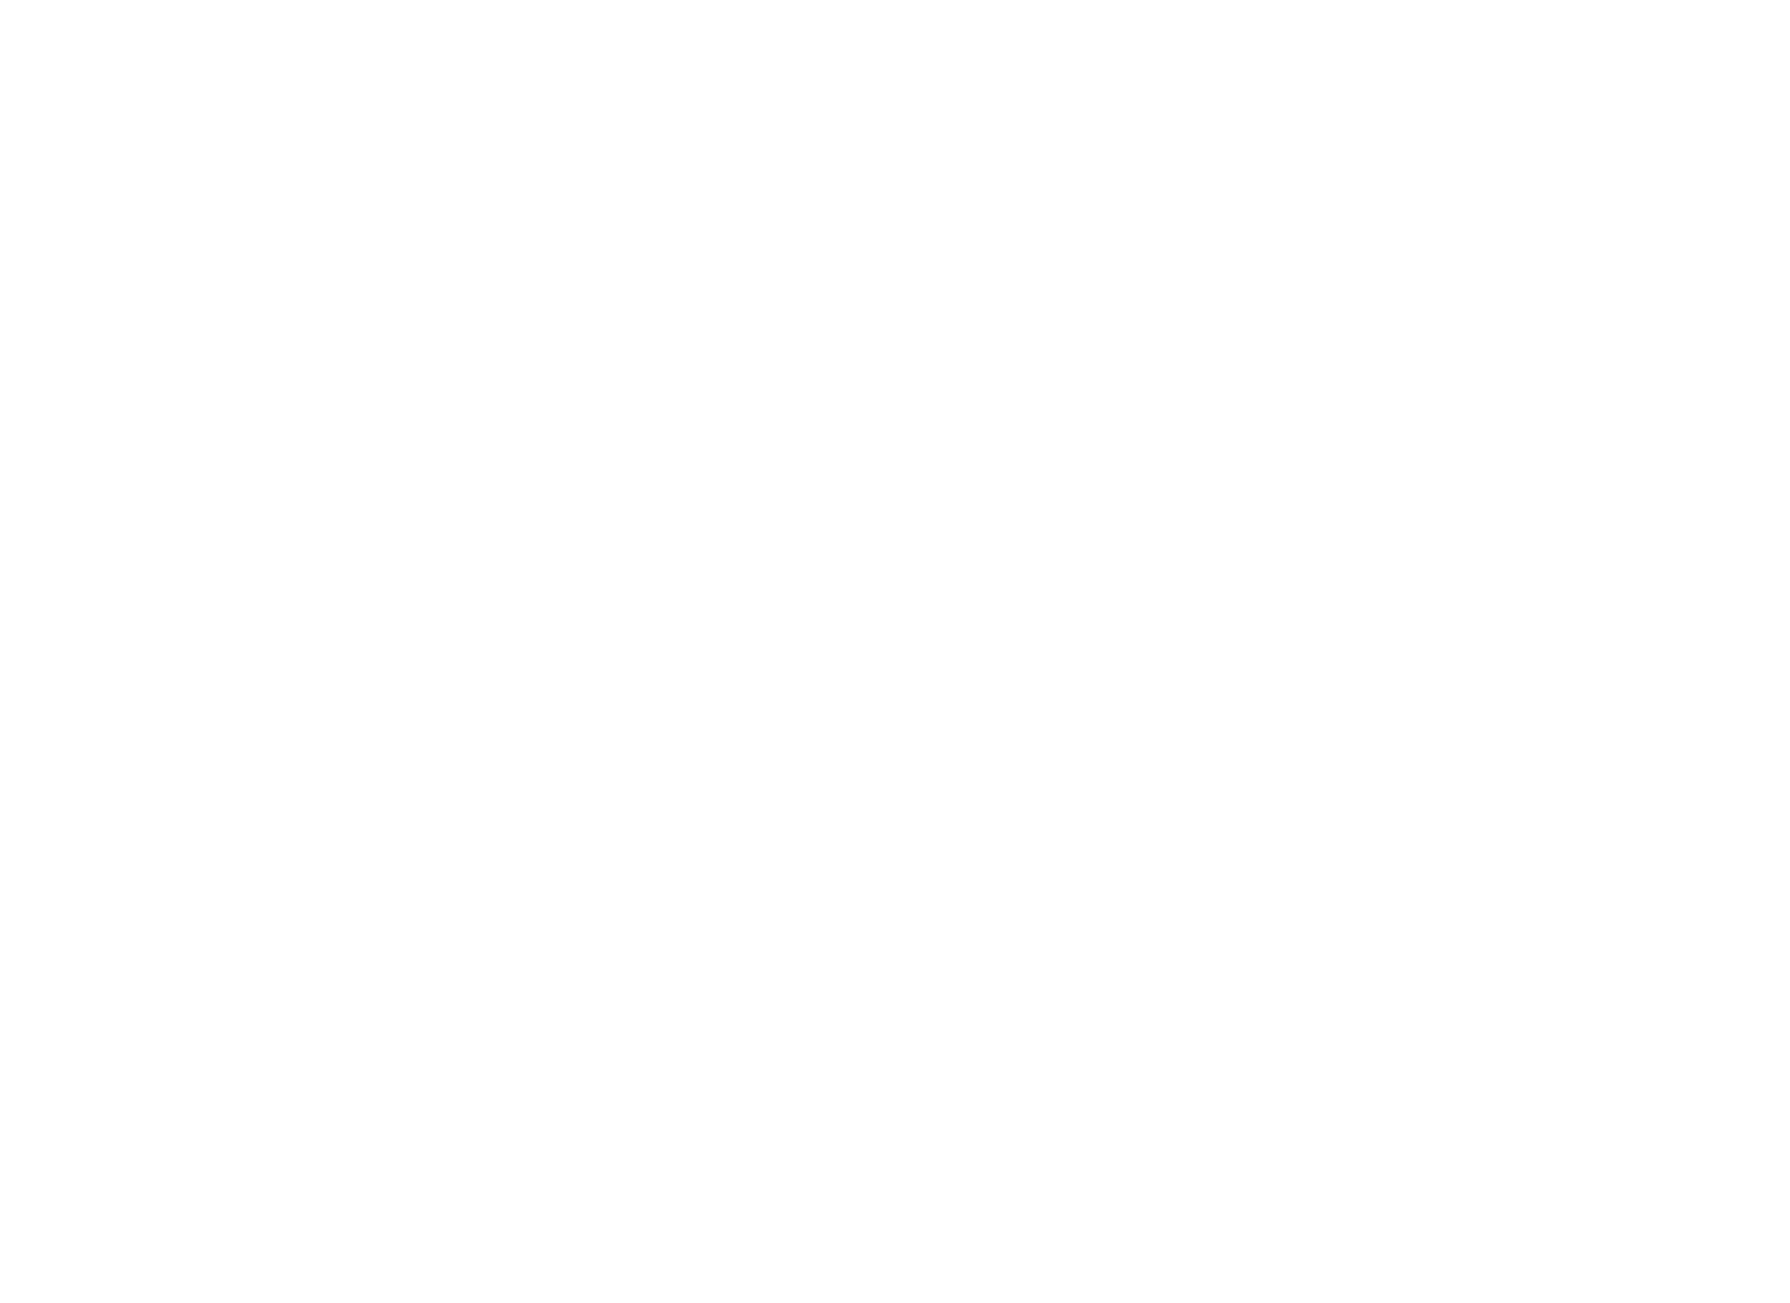 Friend Group white